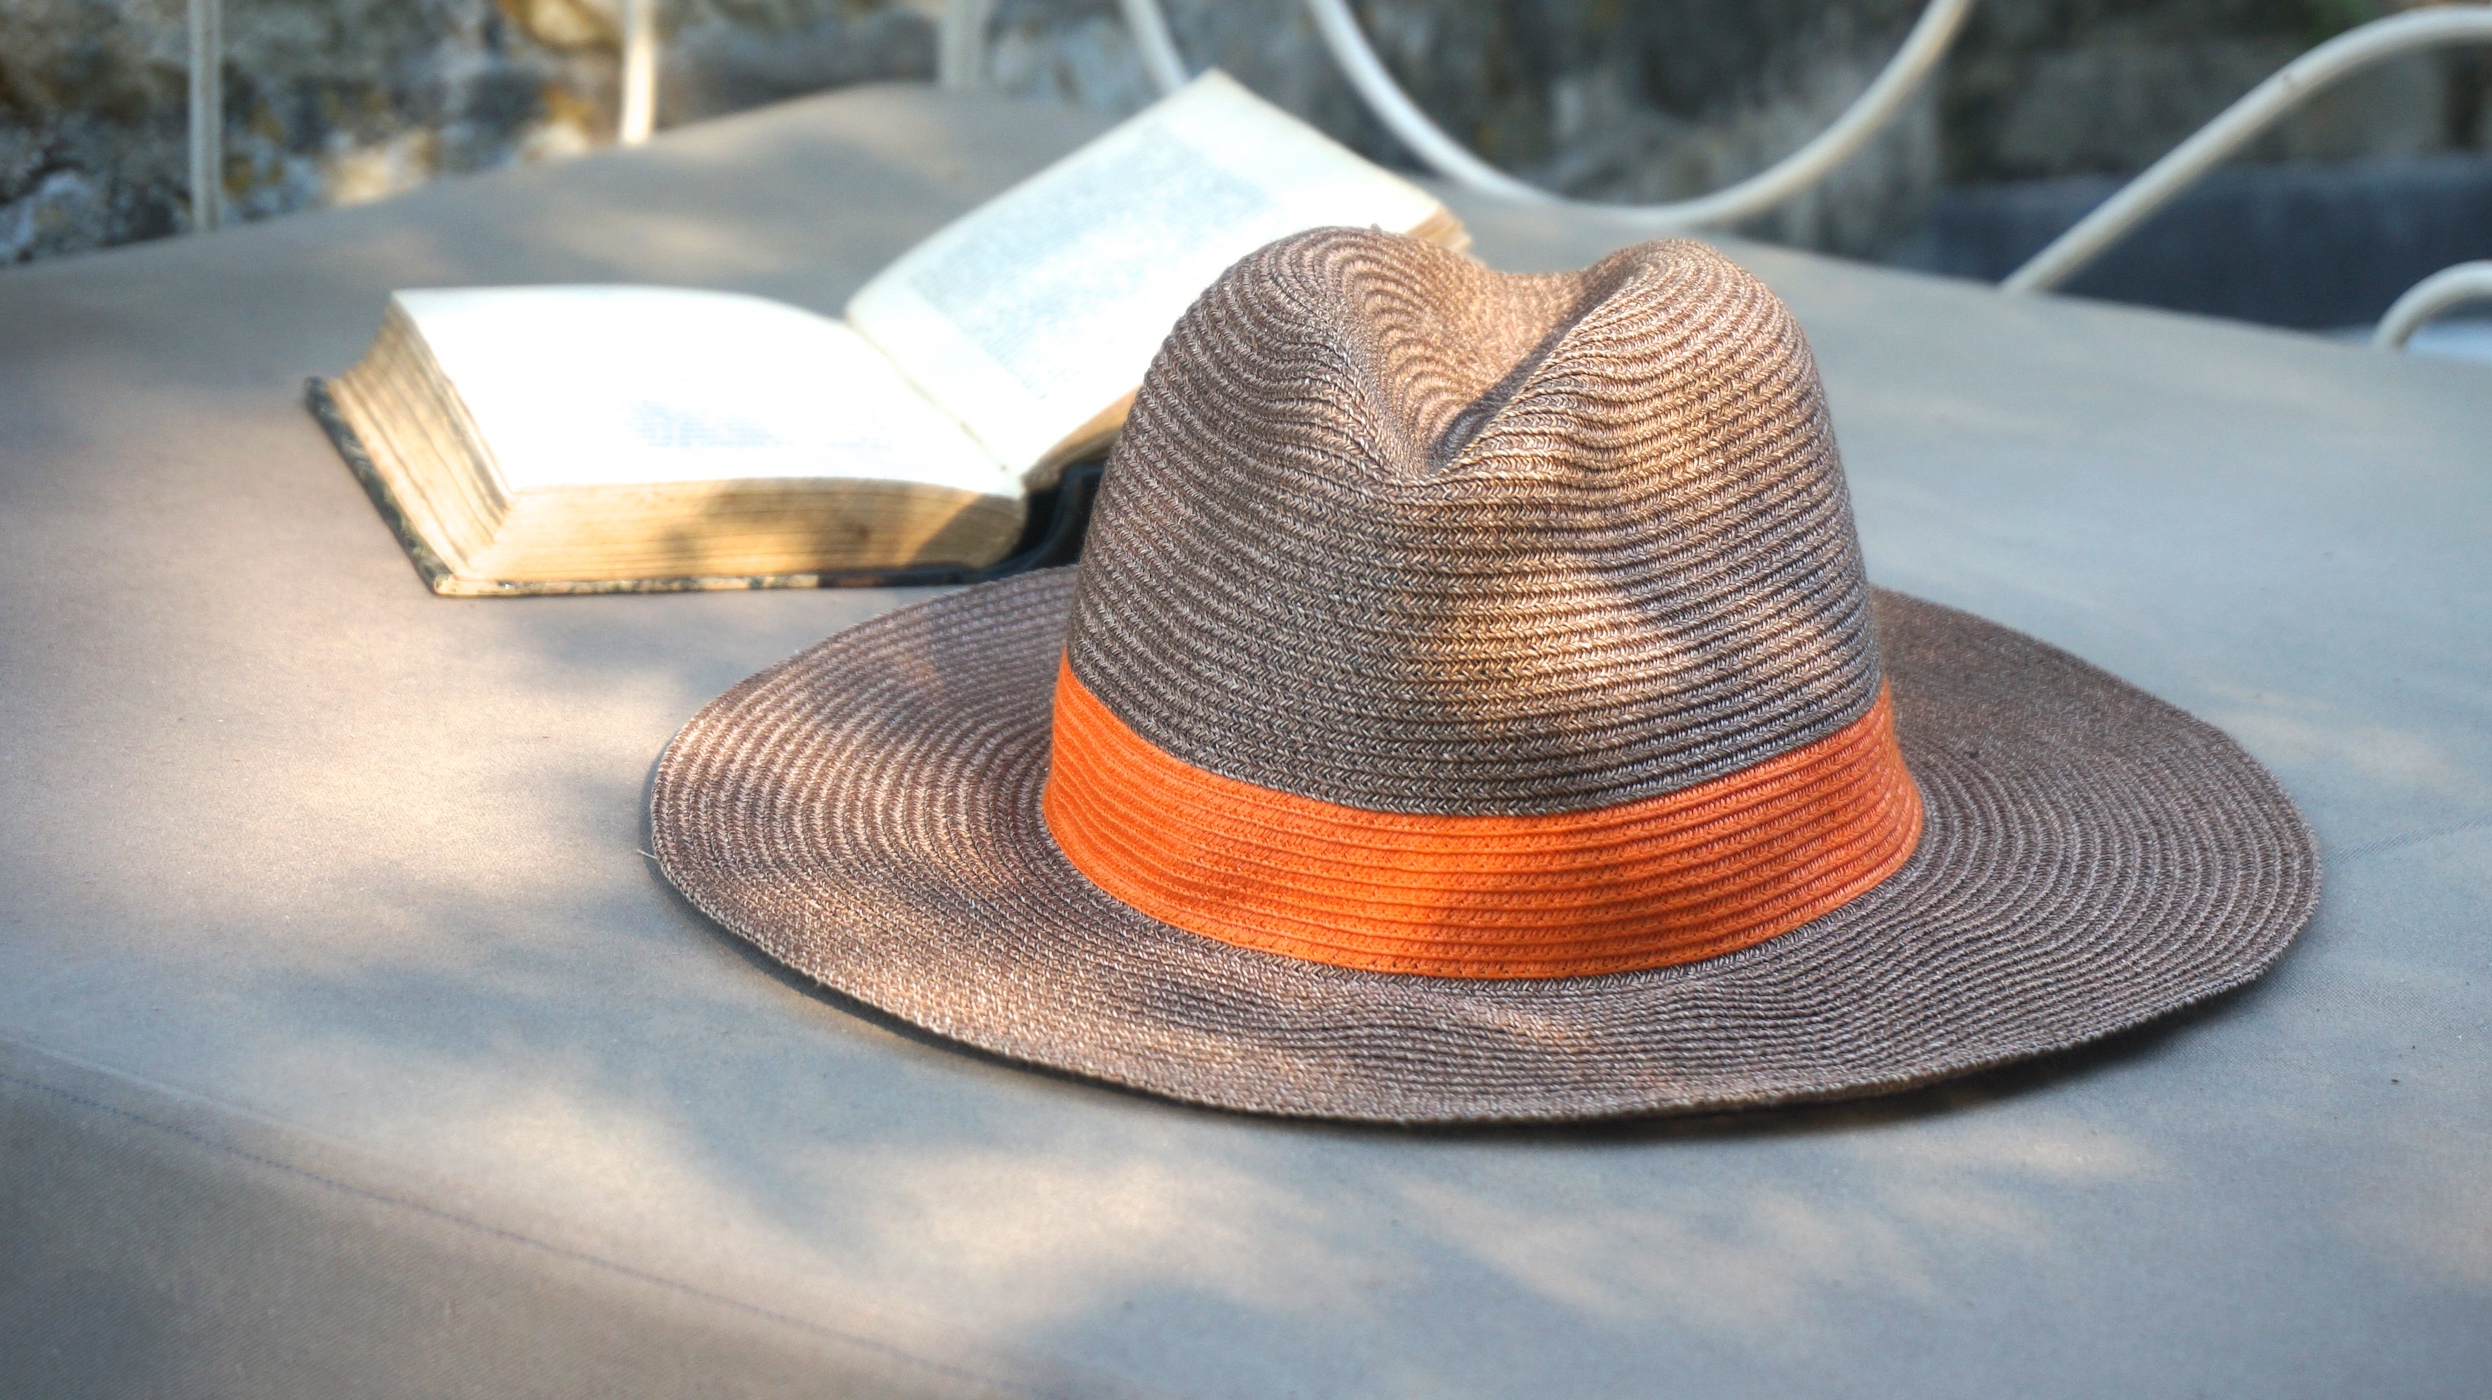 lastelier-chapeau-portofino-orange-lasteleir-maison-sensey©